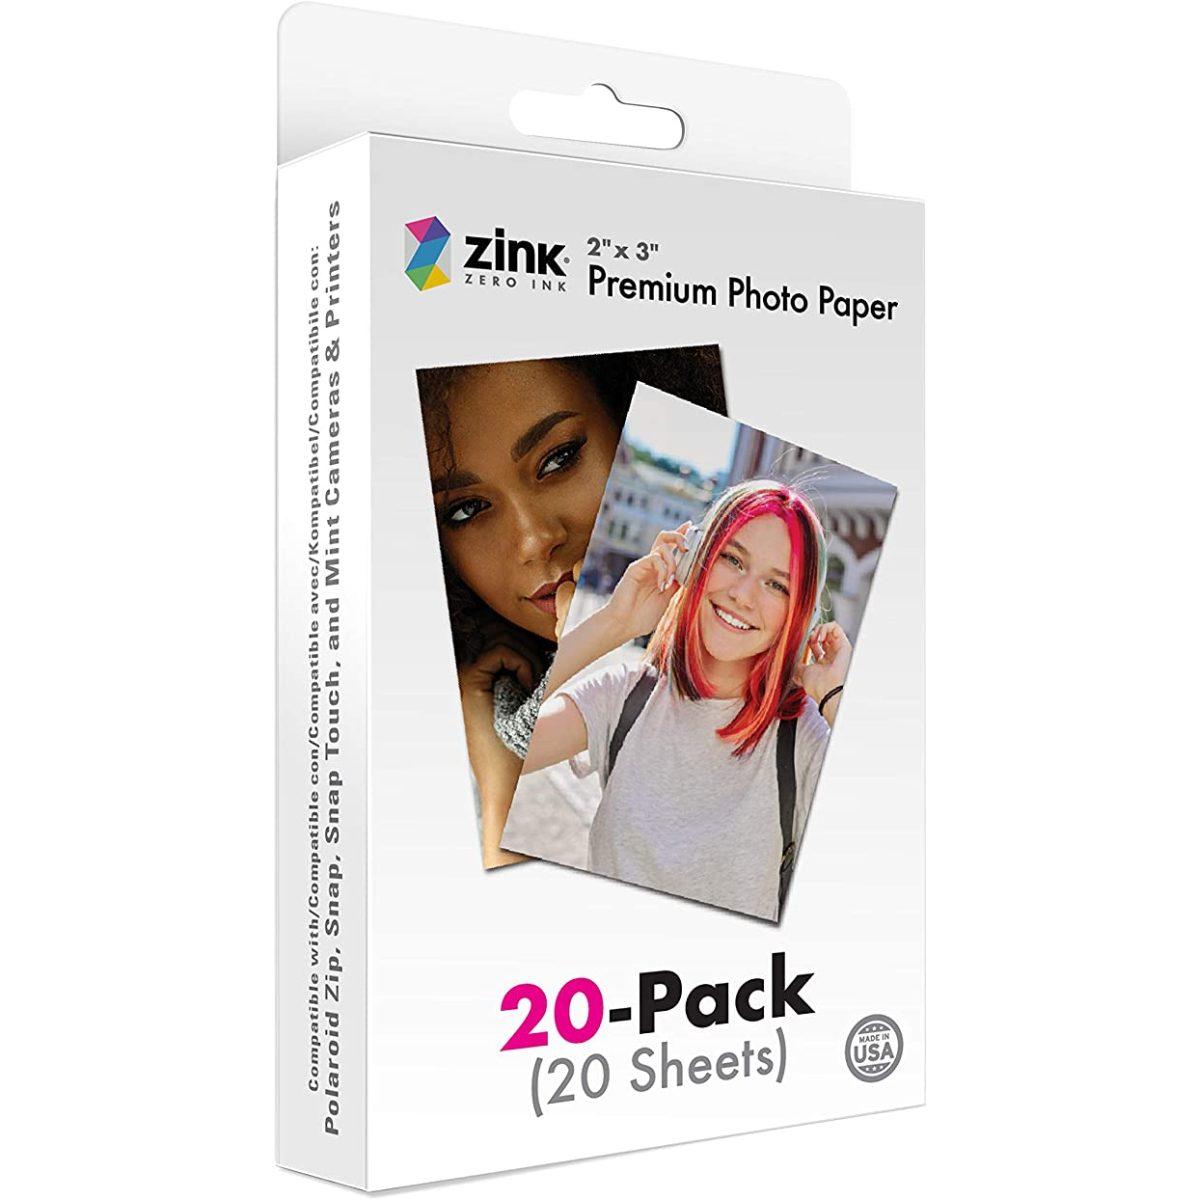 Polaroid Pellicola Polaroid Zink 2x3 20pz - Pellicole istantanee